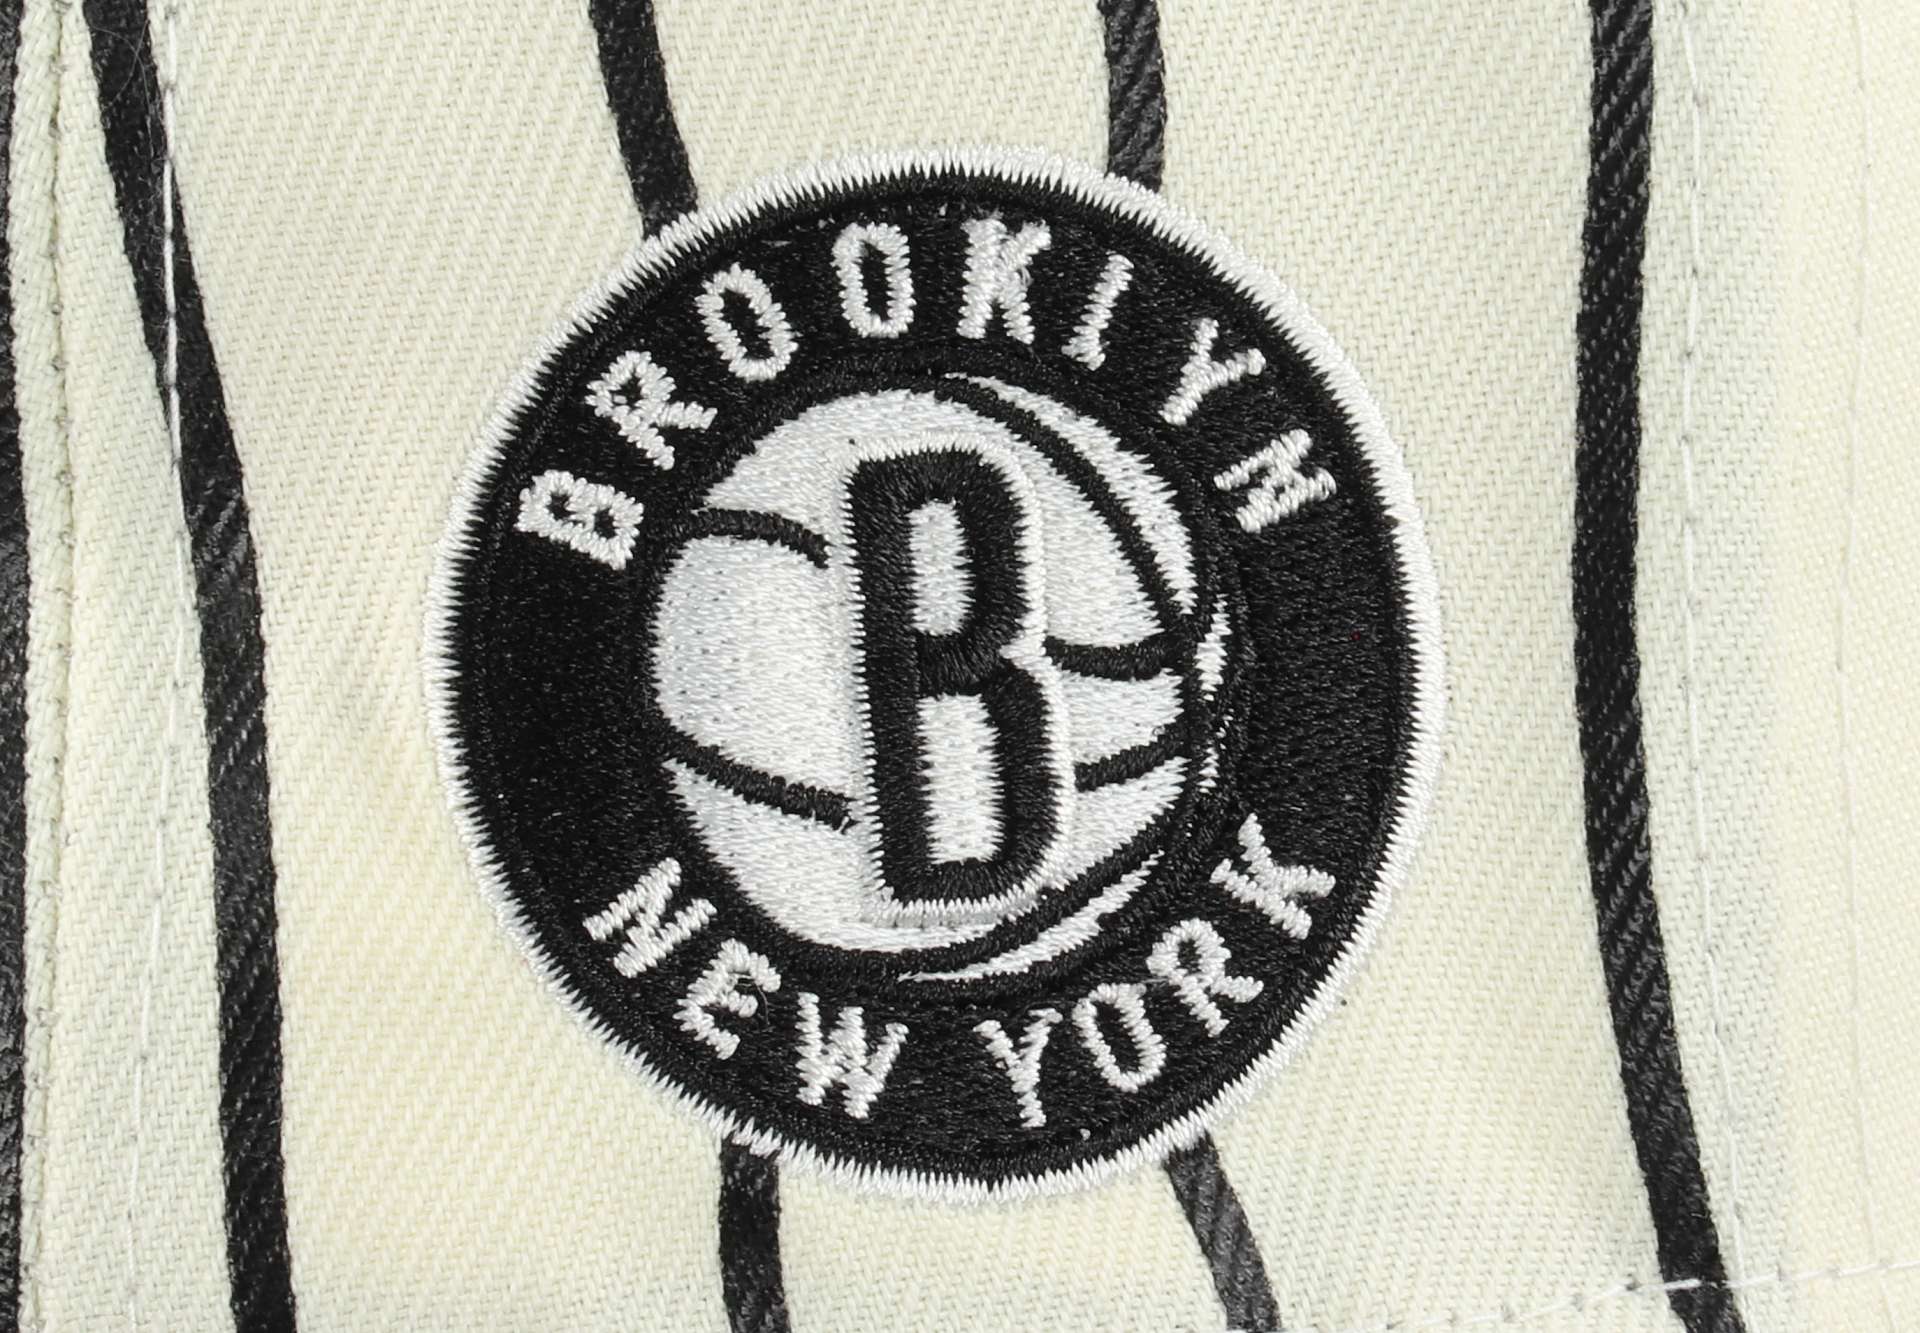 Brooklyn Nets City Arch White 9Fifty Snapback Cap New Era